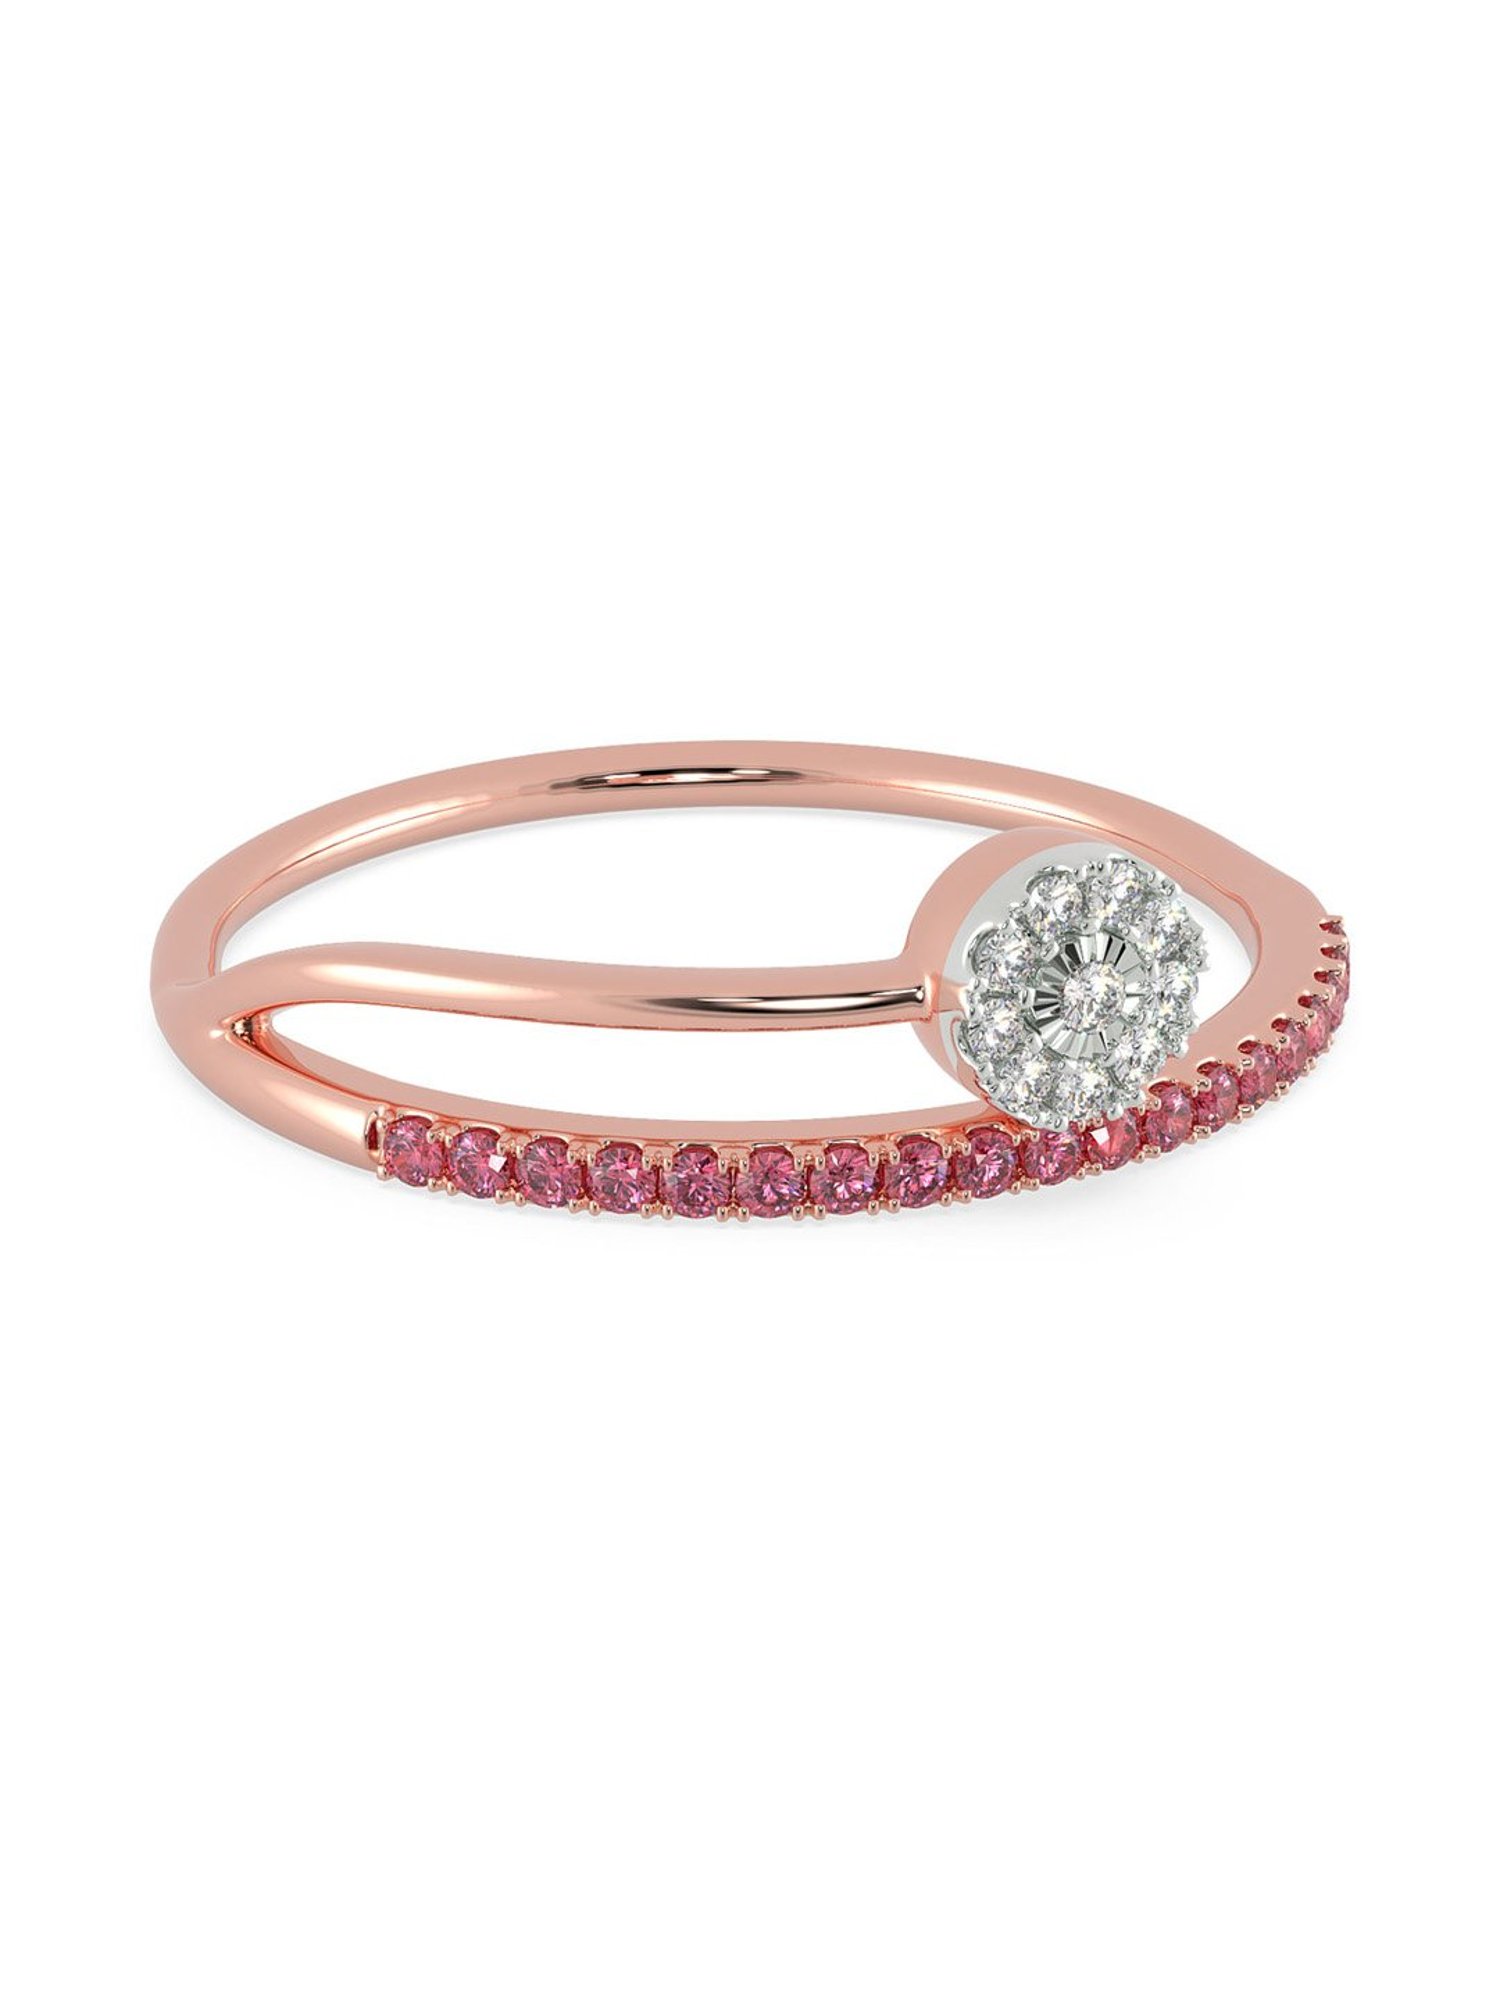 Amethyst, Pink Sapphire and Diamond Ring | CGR119P-DAPS | Valina Gemstone  Jewelry